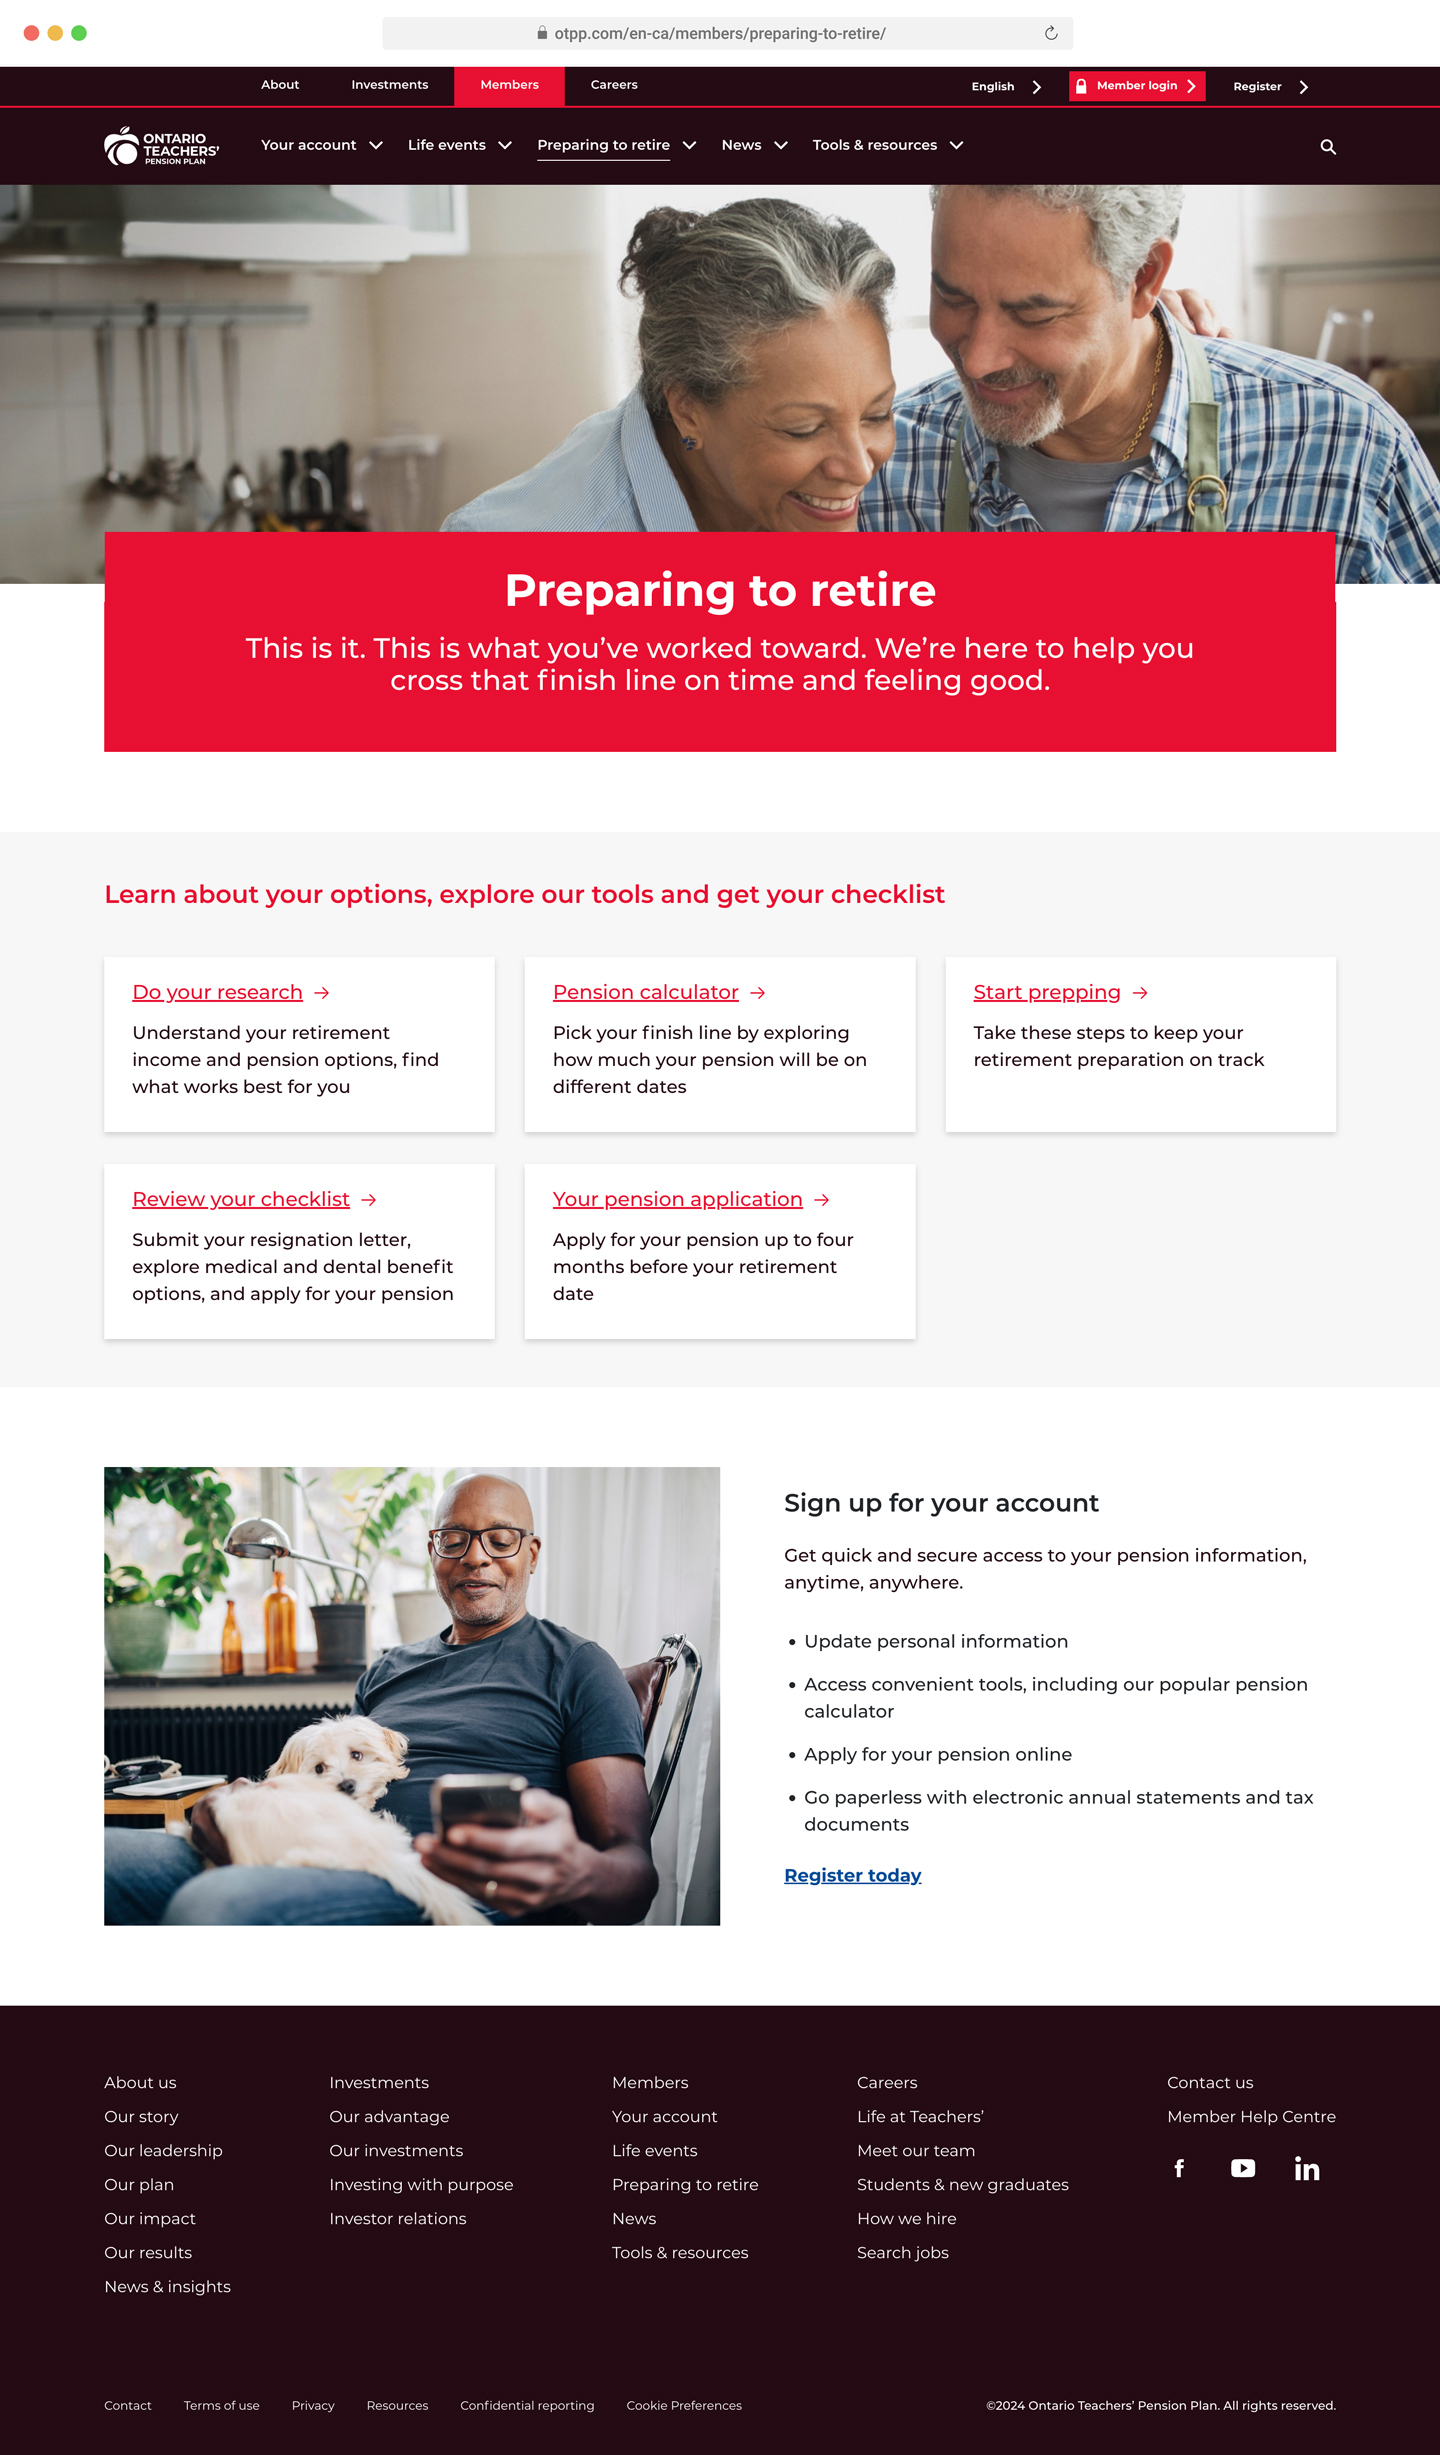 OTPP Preparing for Retirement landing page